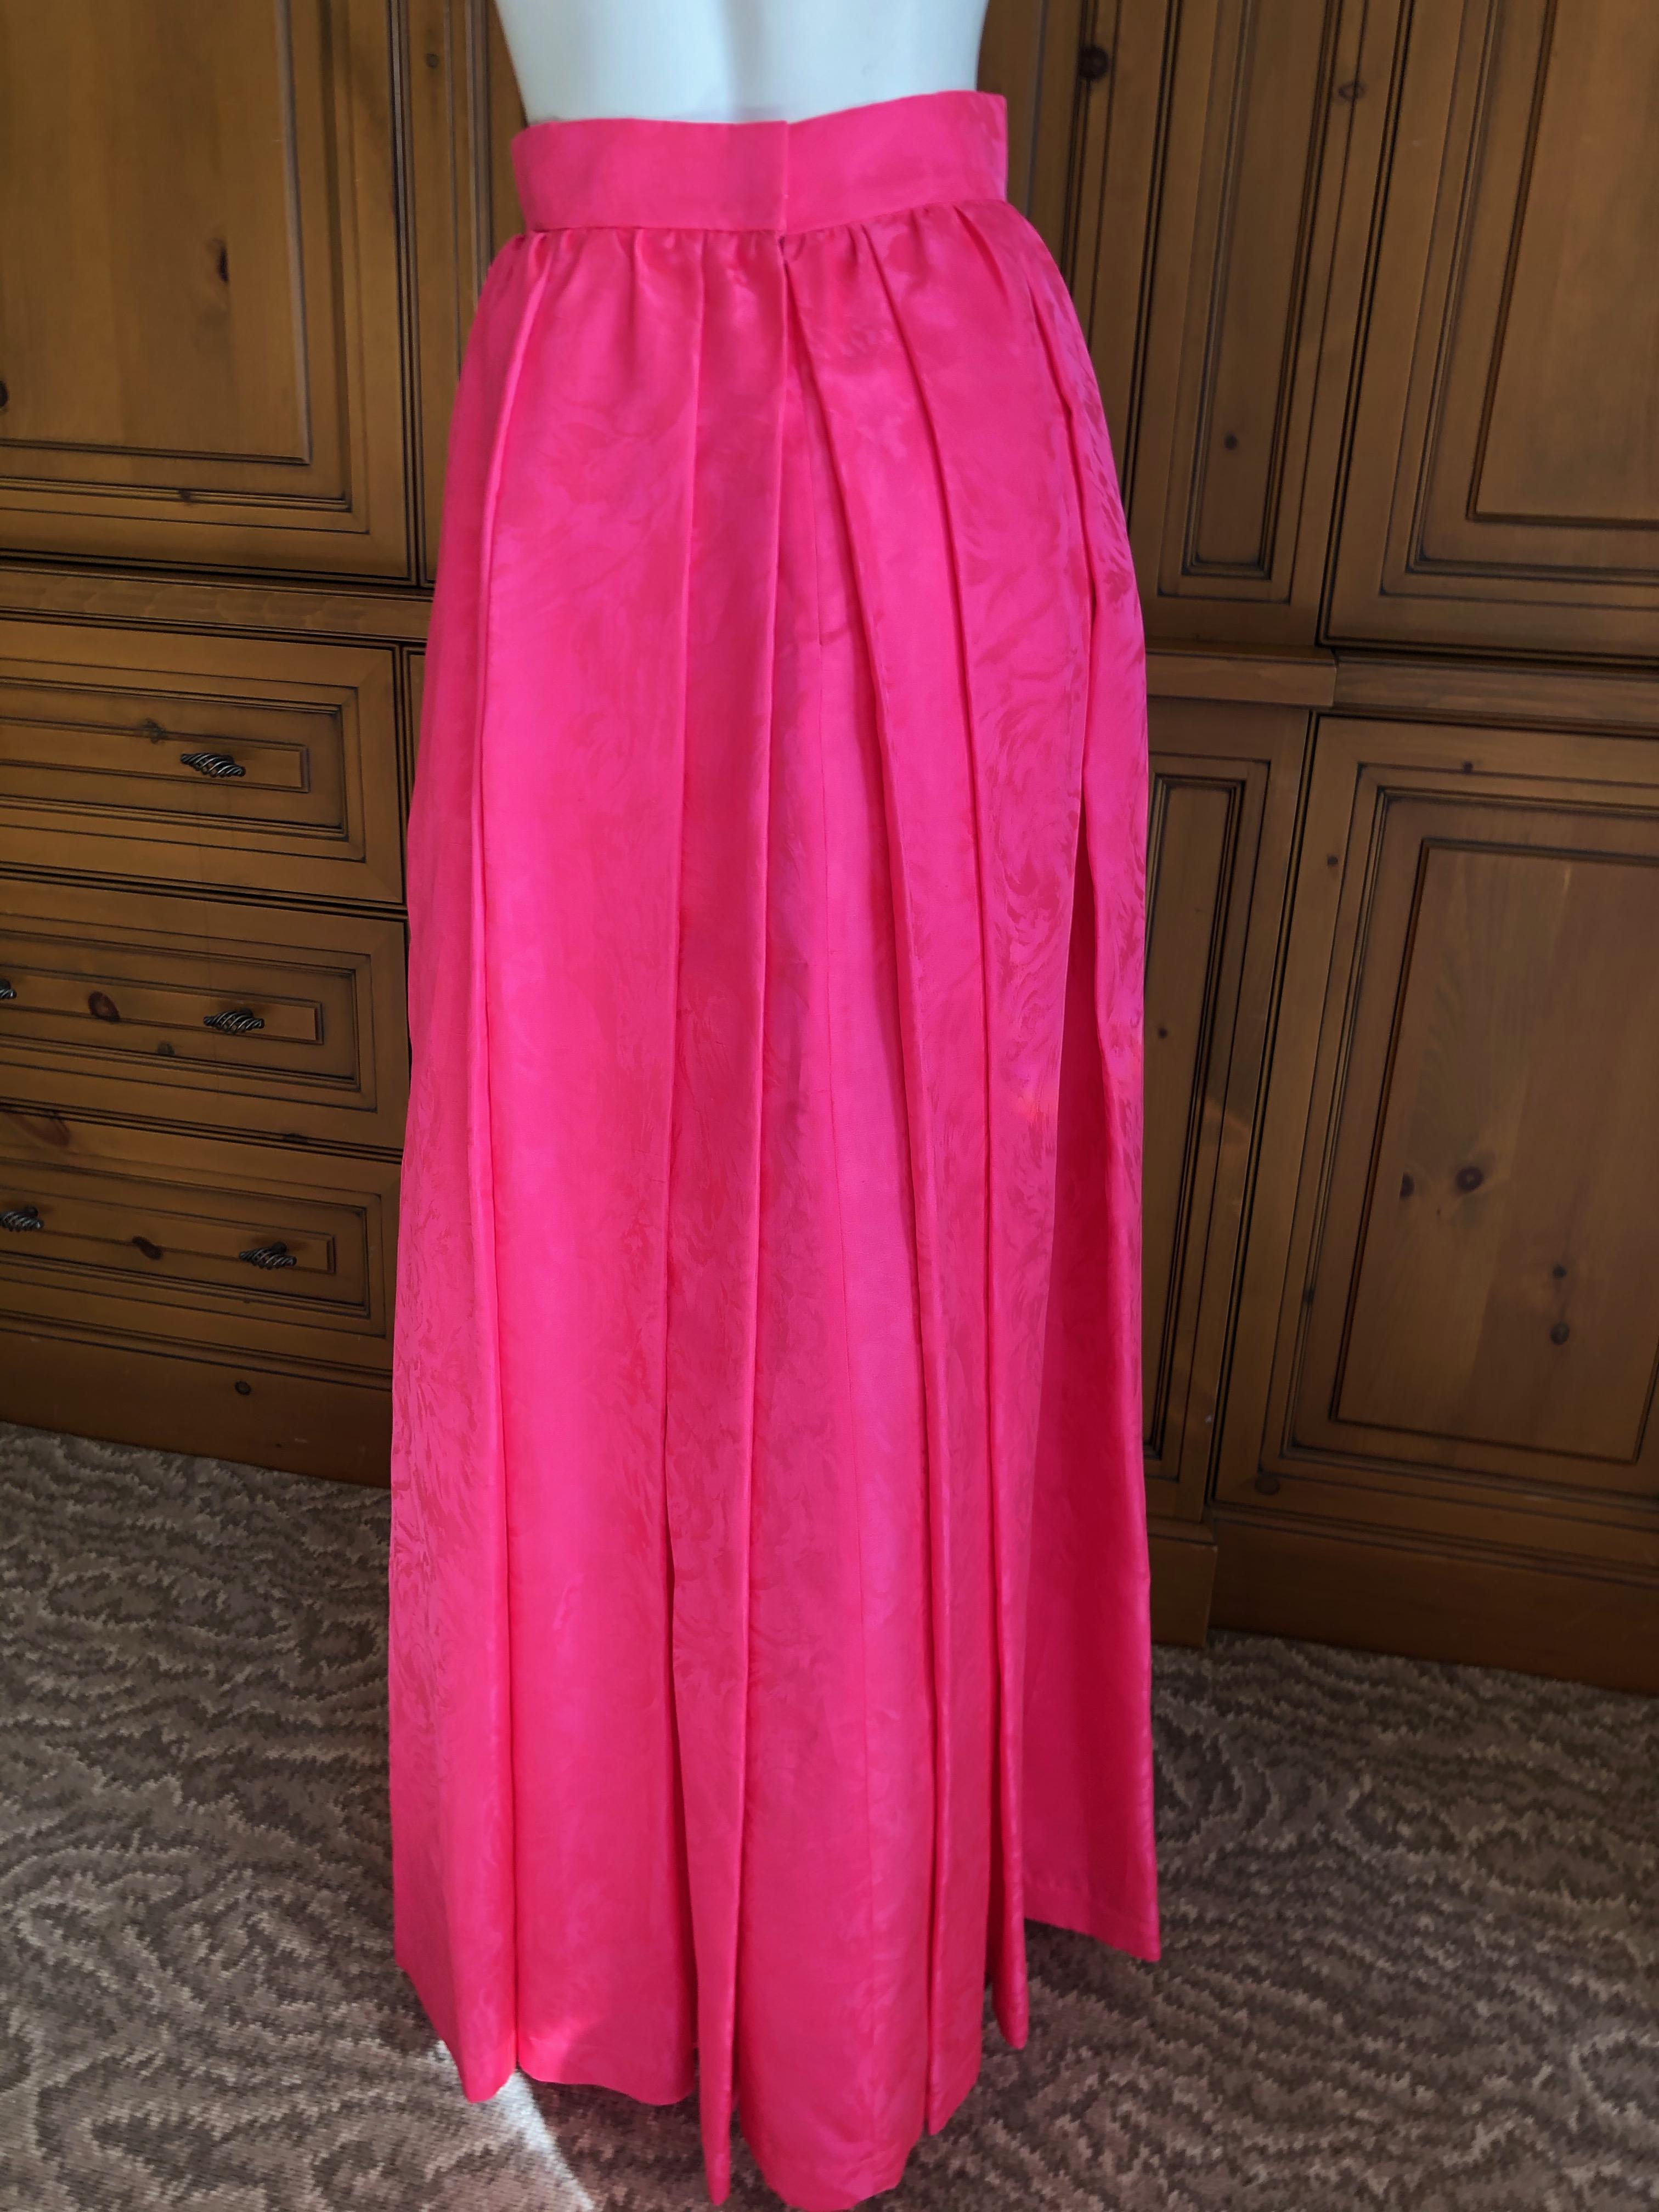 Yves Saint Laurent Rive Gauche Vintage 70's Pink Silk Faille Ball Skirt Pockets For Sale 2